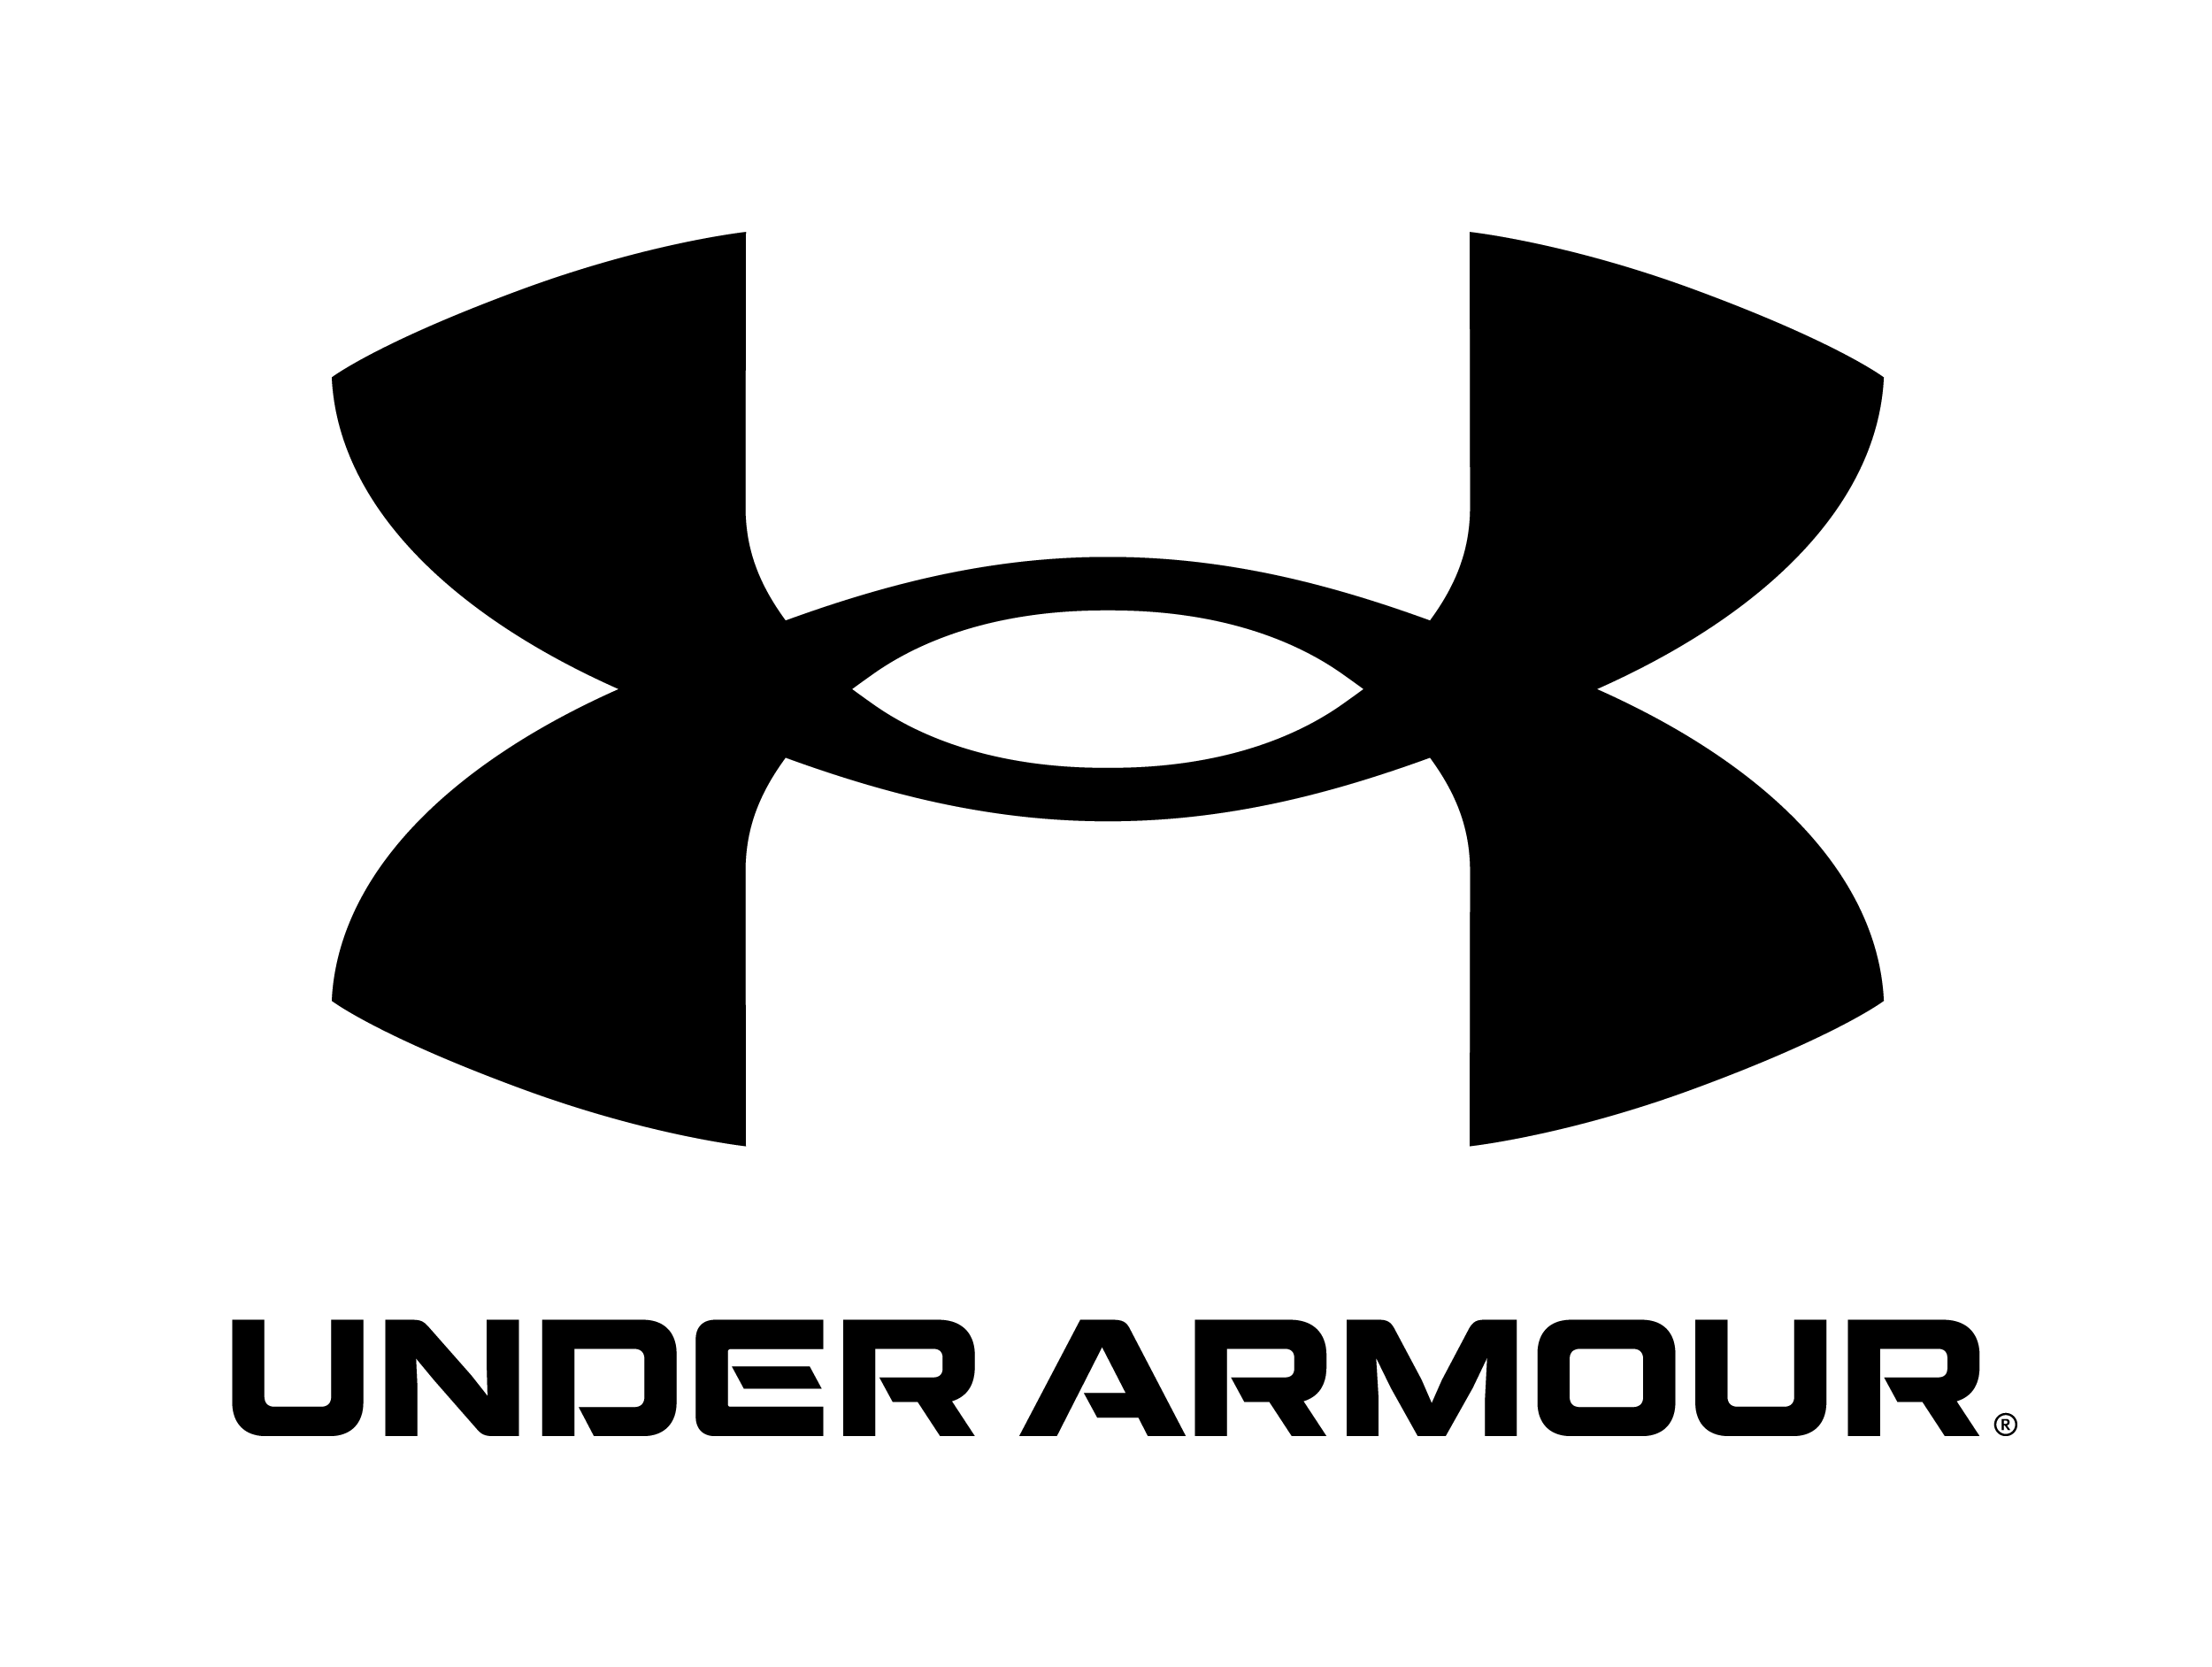 Under-Armour-logo